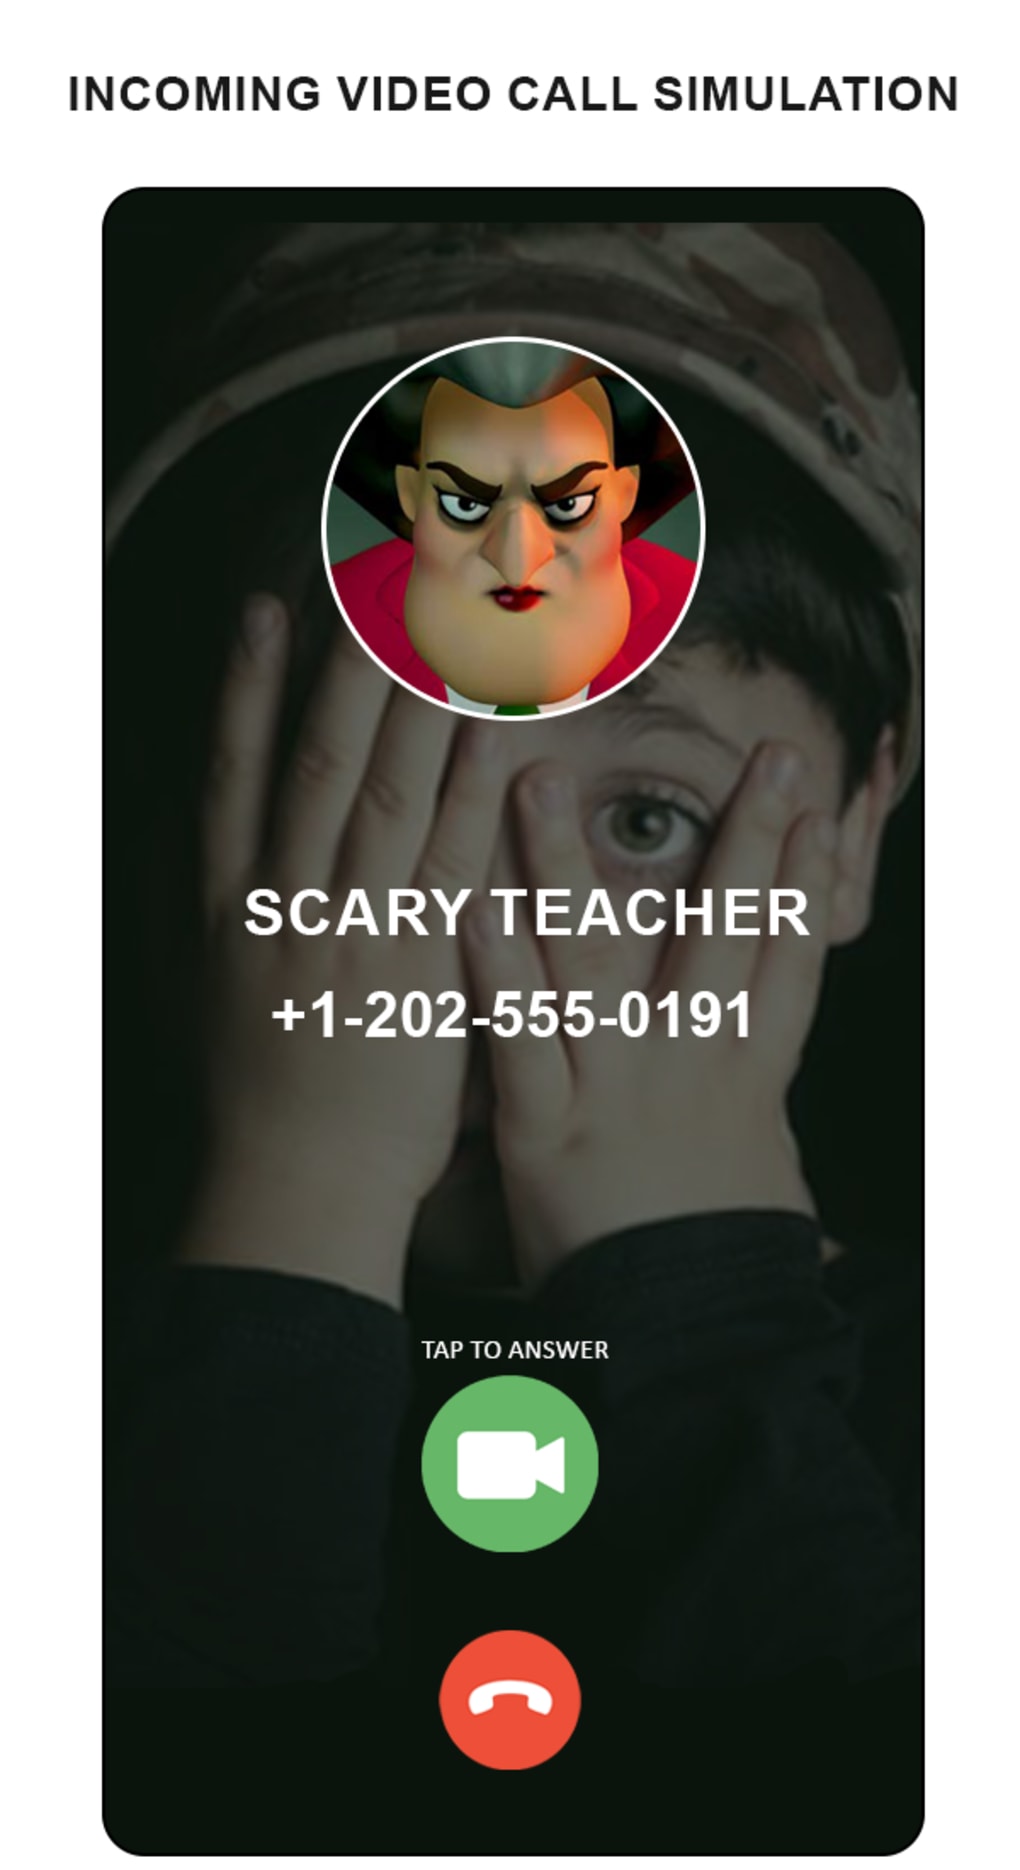 Fake Call Scary Teacher android iOS-TapTap